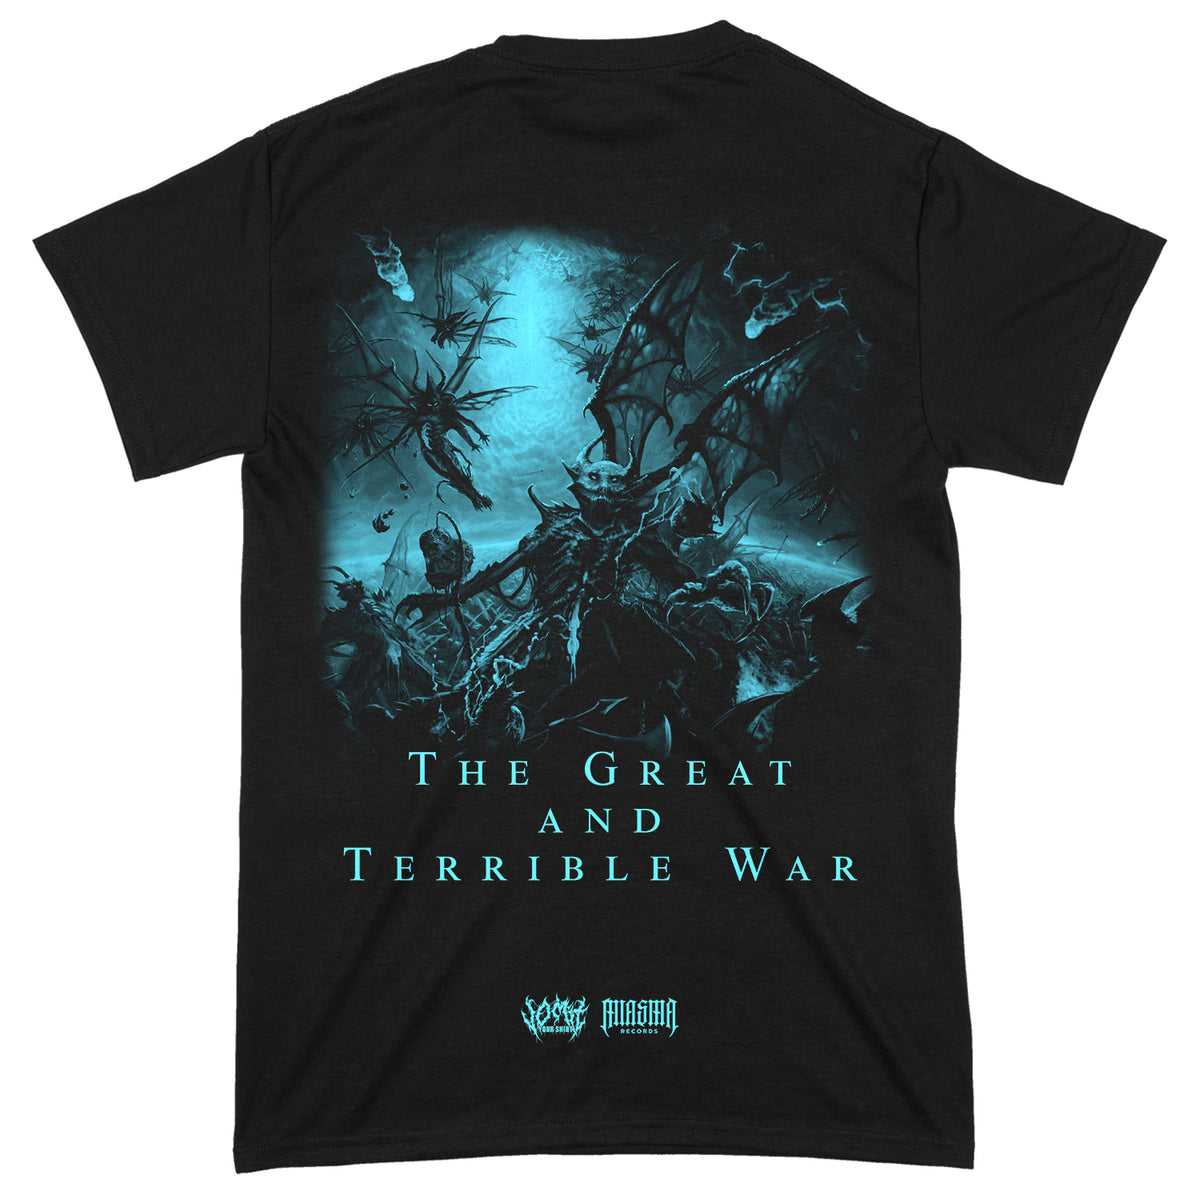 Dysmorphic Demiurge "The Great and Terrible War" T-Shirt - Miasma Records